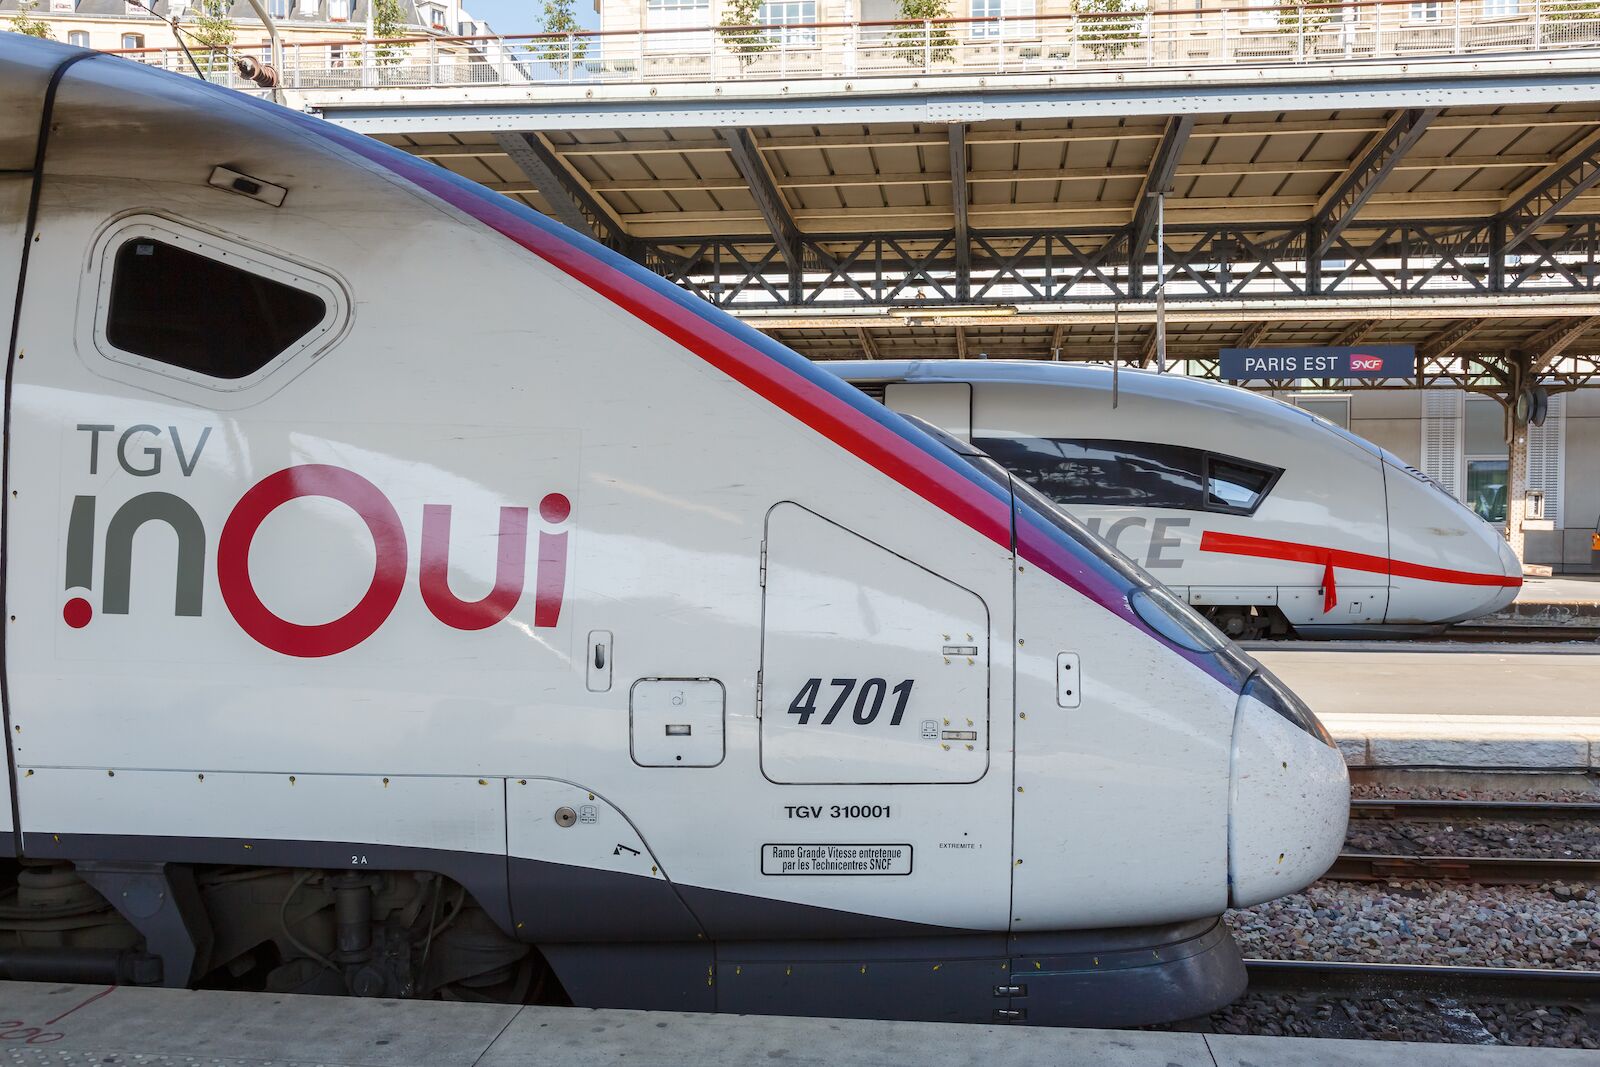 The TGV InOui, the high-speed train that runs between Paris and Barcelona